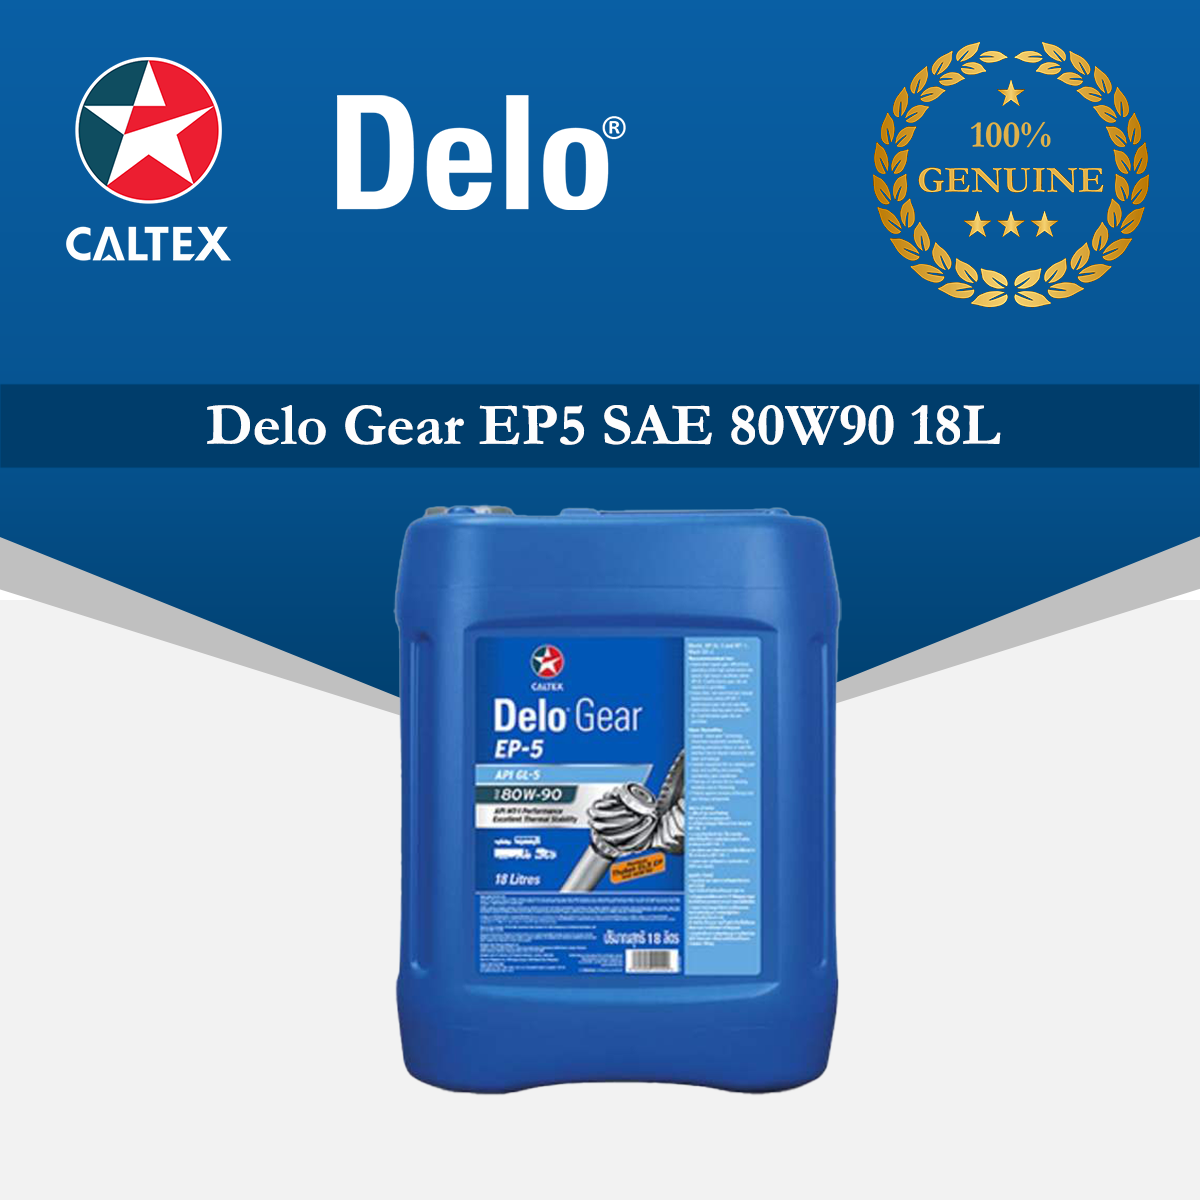 CALTEX Delo Gear Oil EP5 SAE 80W90 (18 Liter)